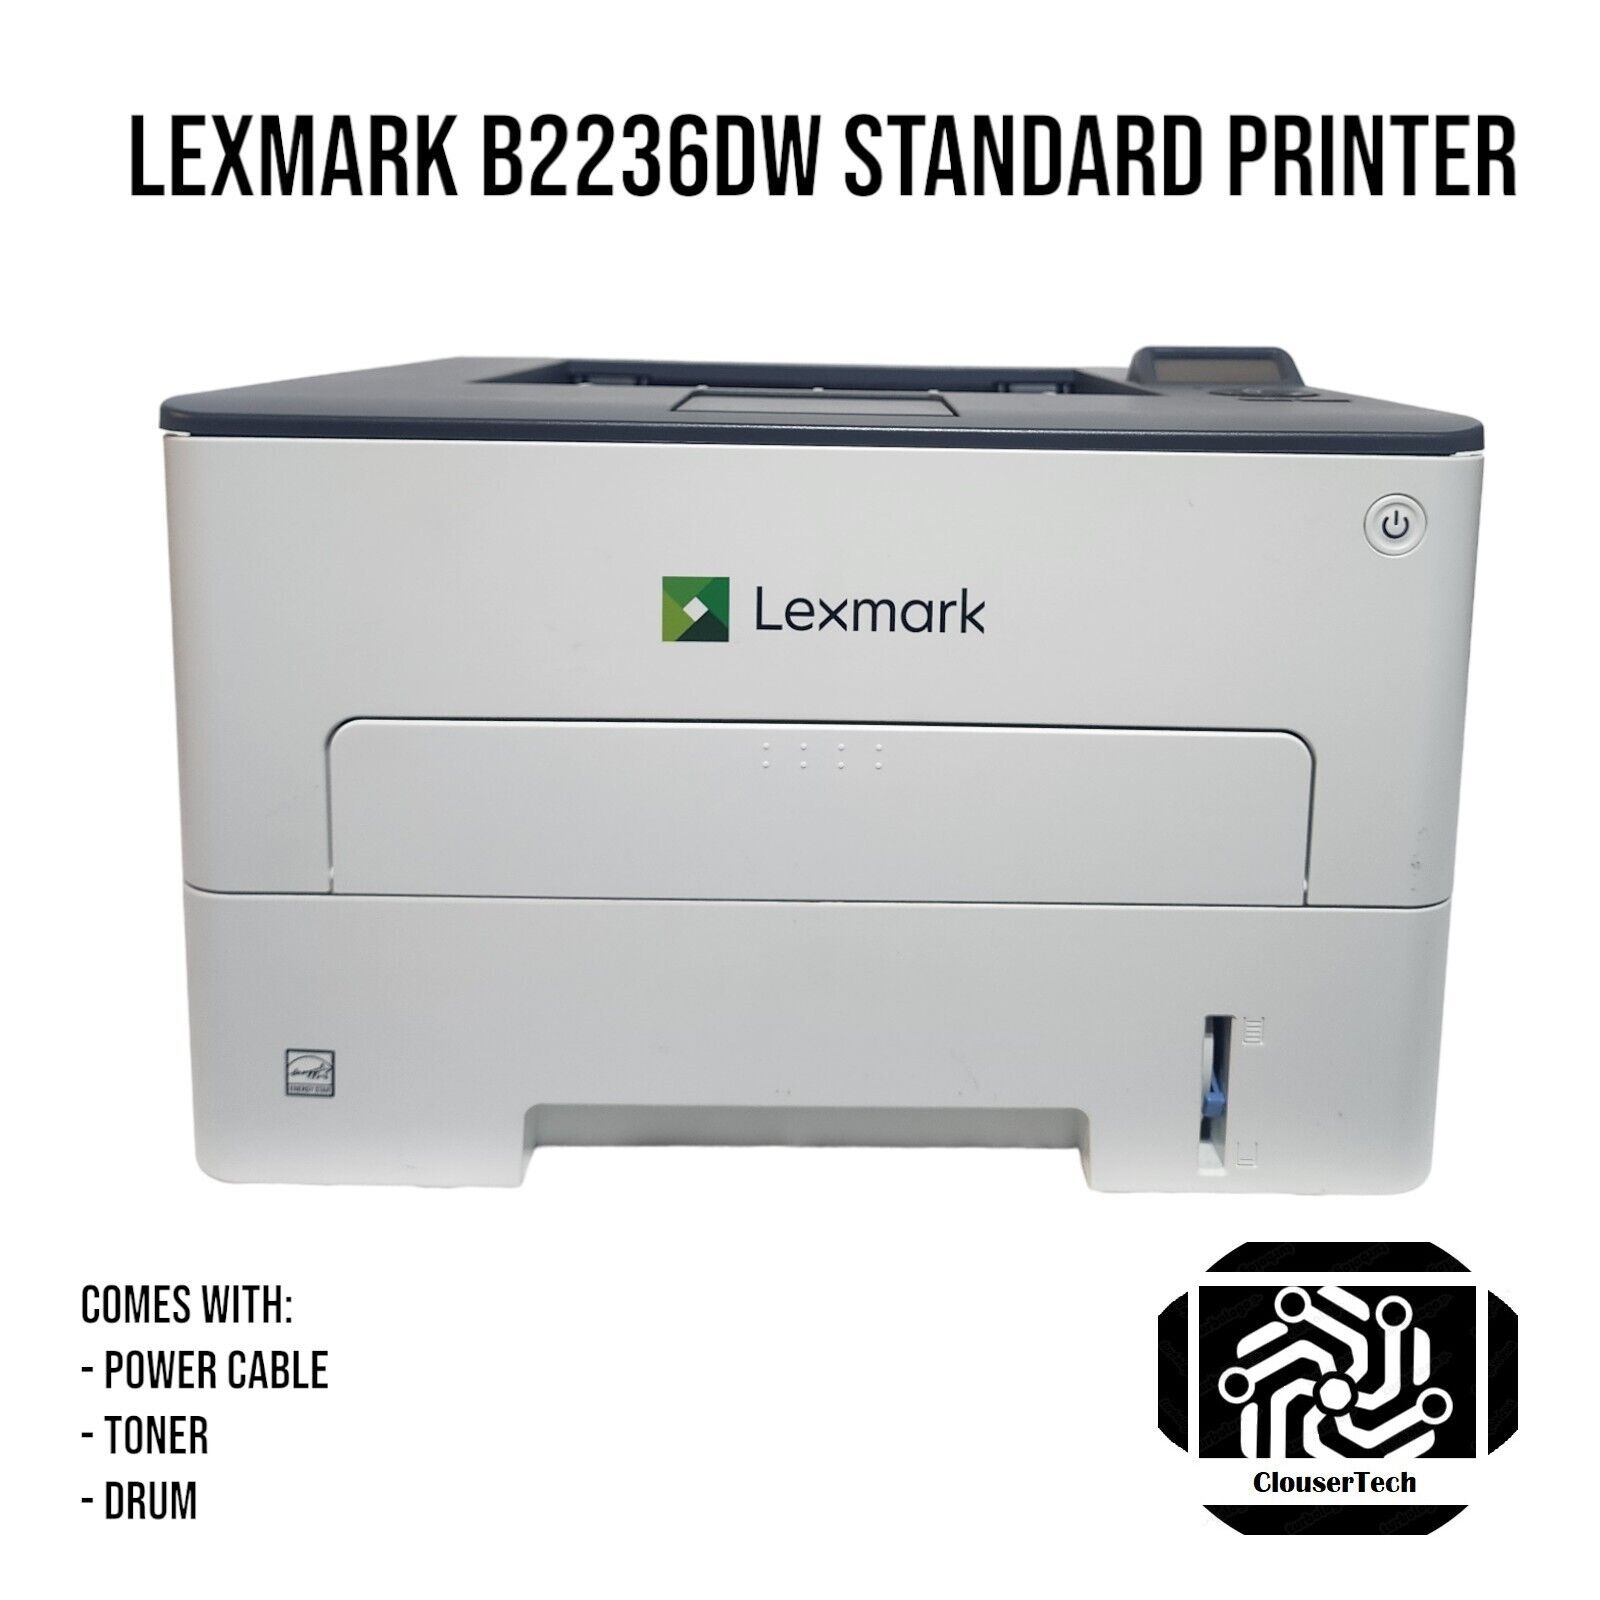 Lexmark B2236dw Black and White Laser Standard Printer | Power Cable - Drum |